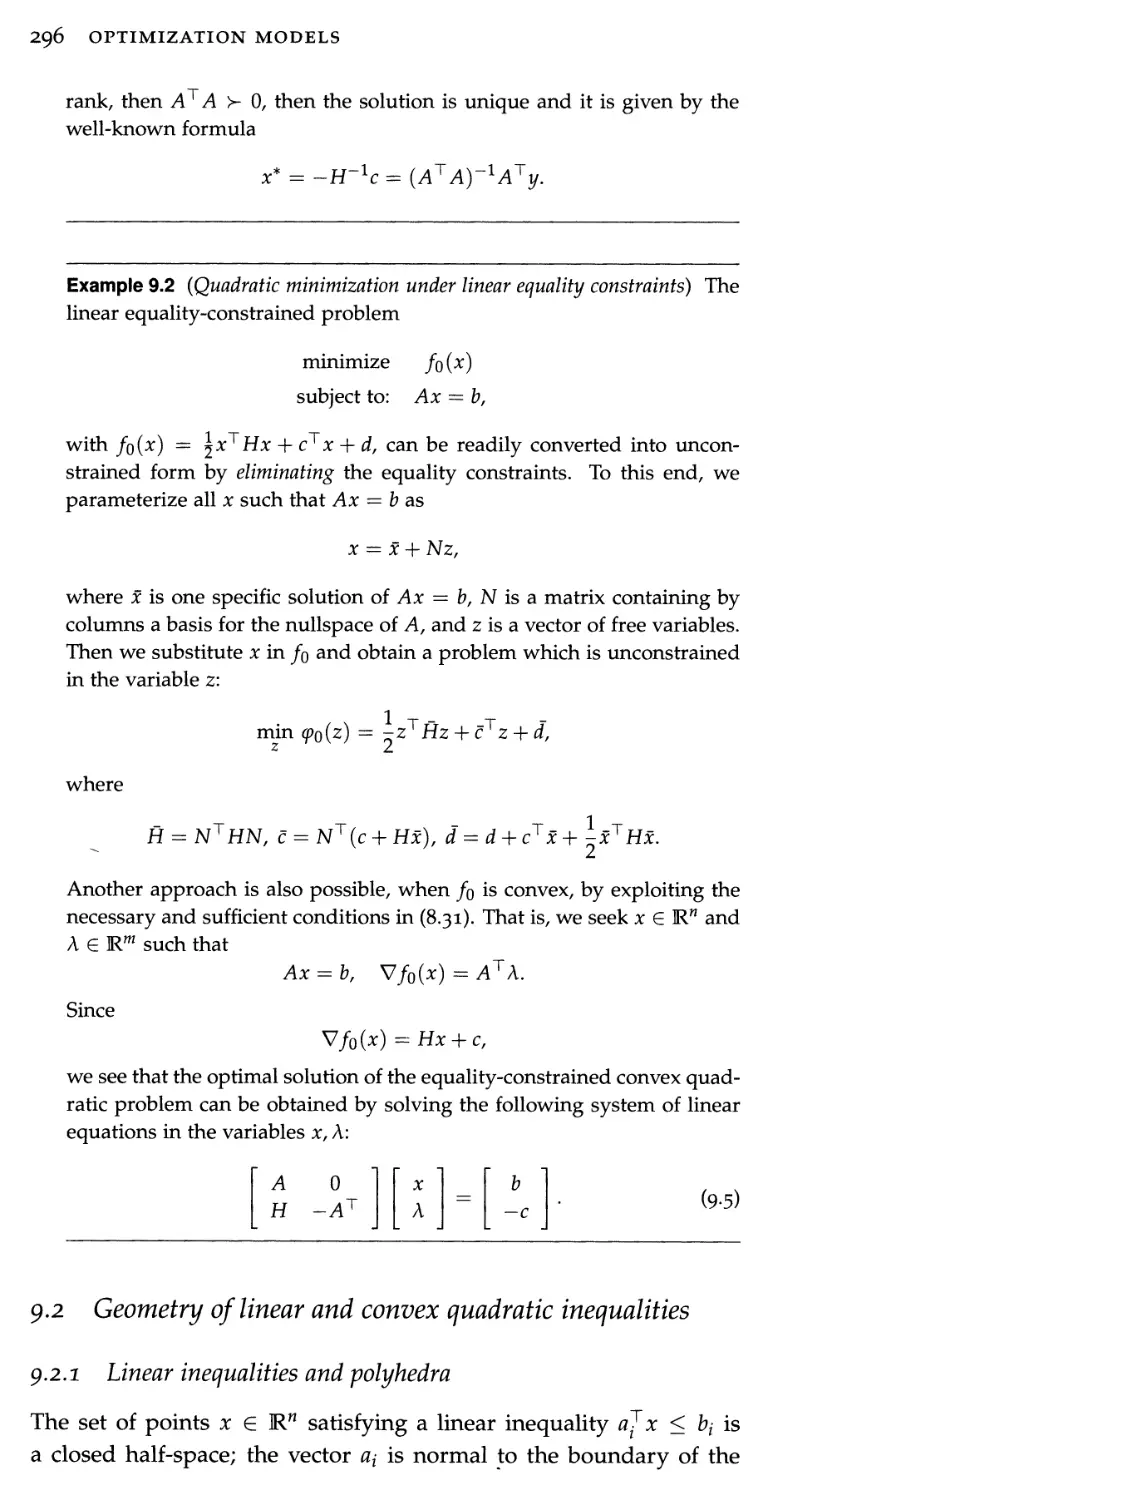 9.2 Geometry of linear and convex quadratic inequalities 296